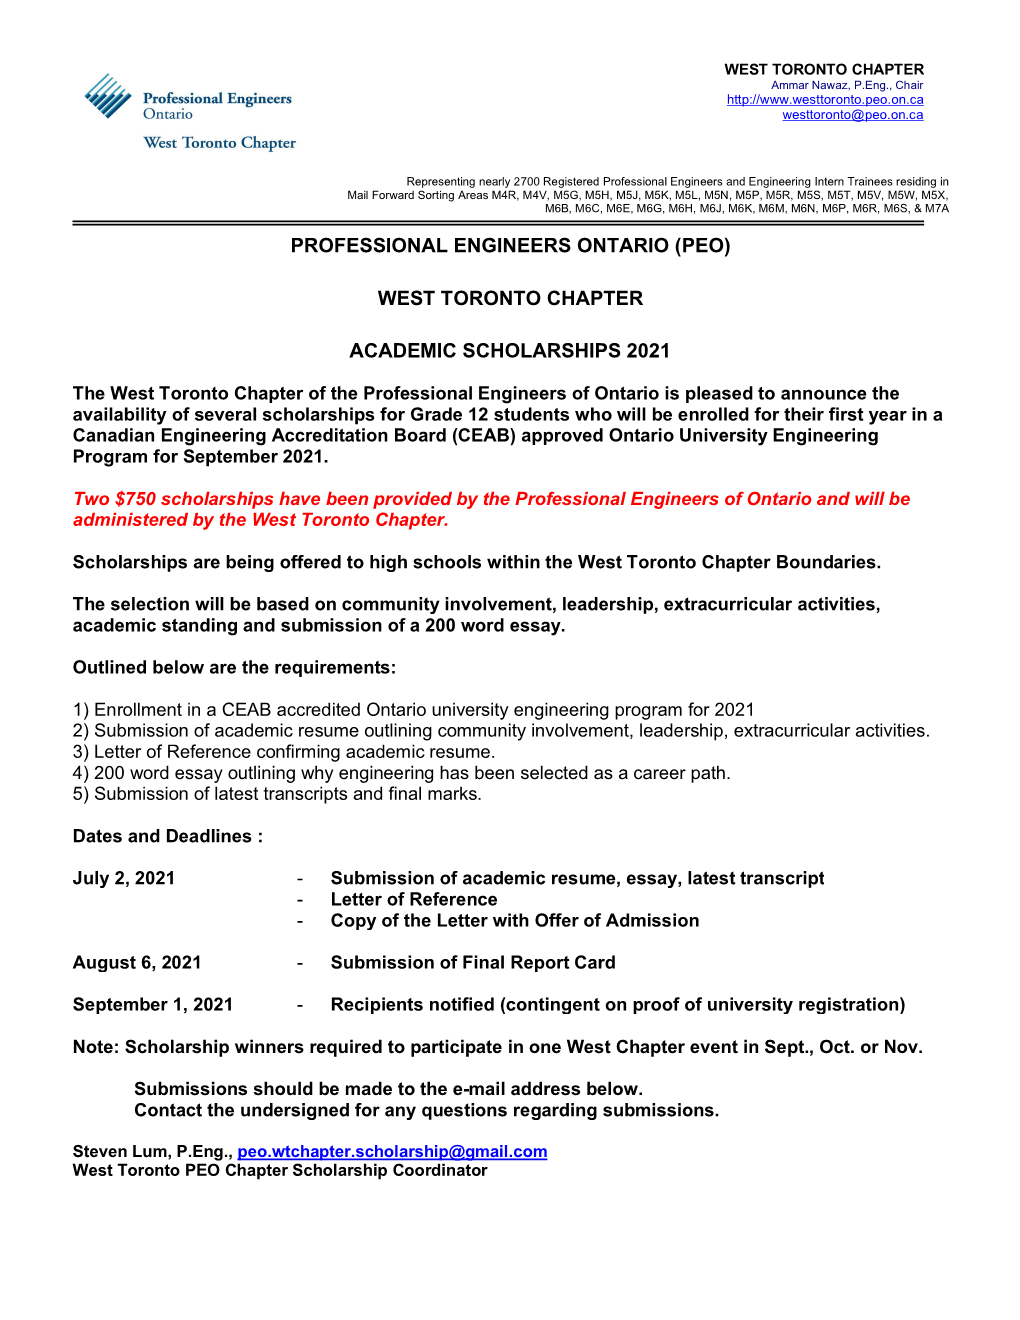 Professional Engineers Ontario (Peo) West Toronto Chapter Academic Scholarships 2021